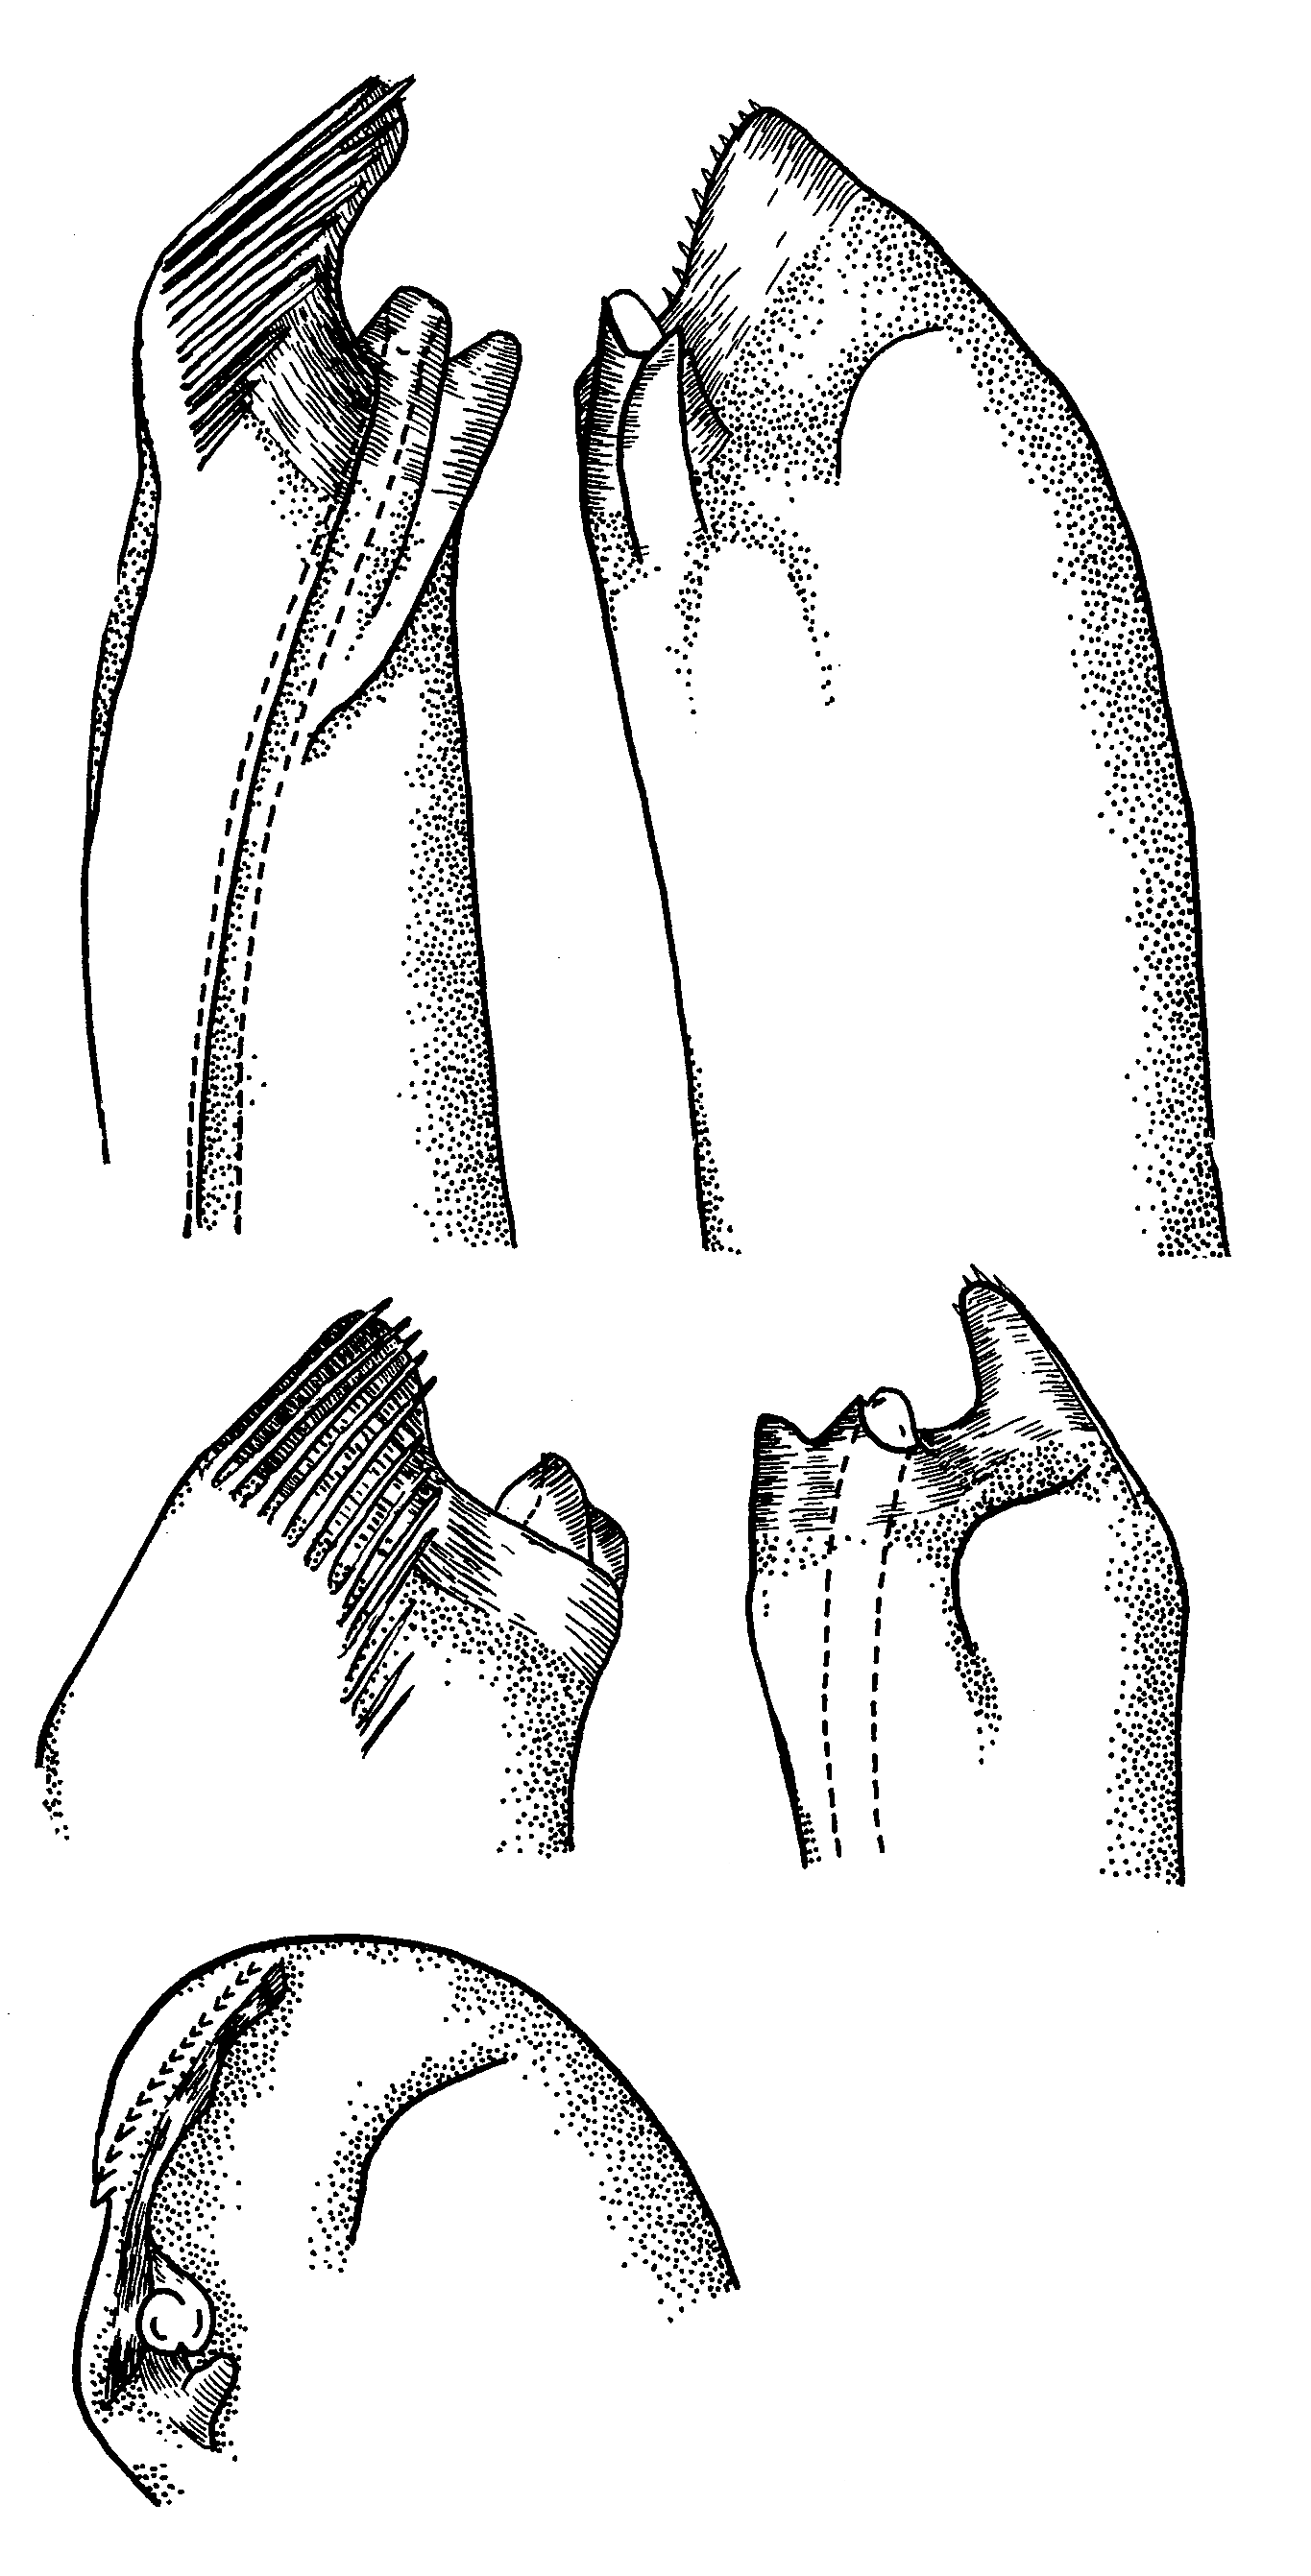 Uca subcylindrica: Crane (1975) image